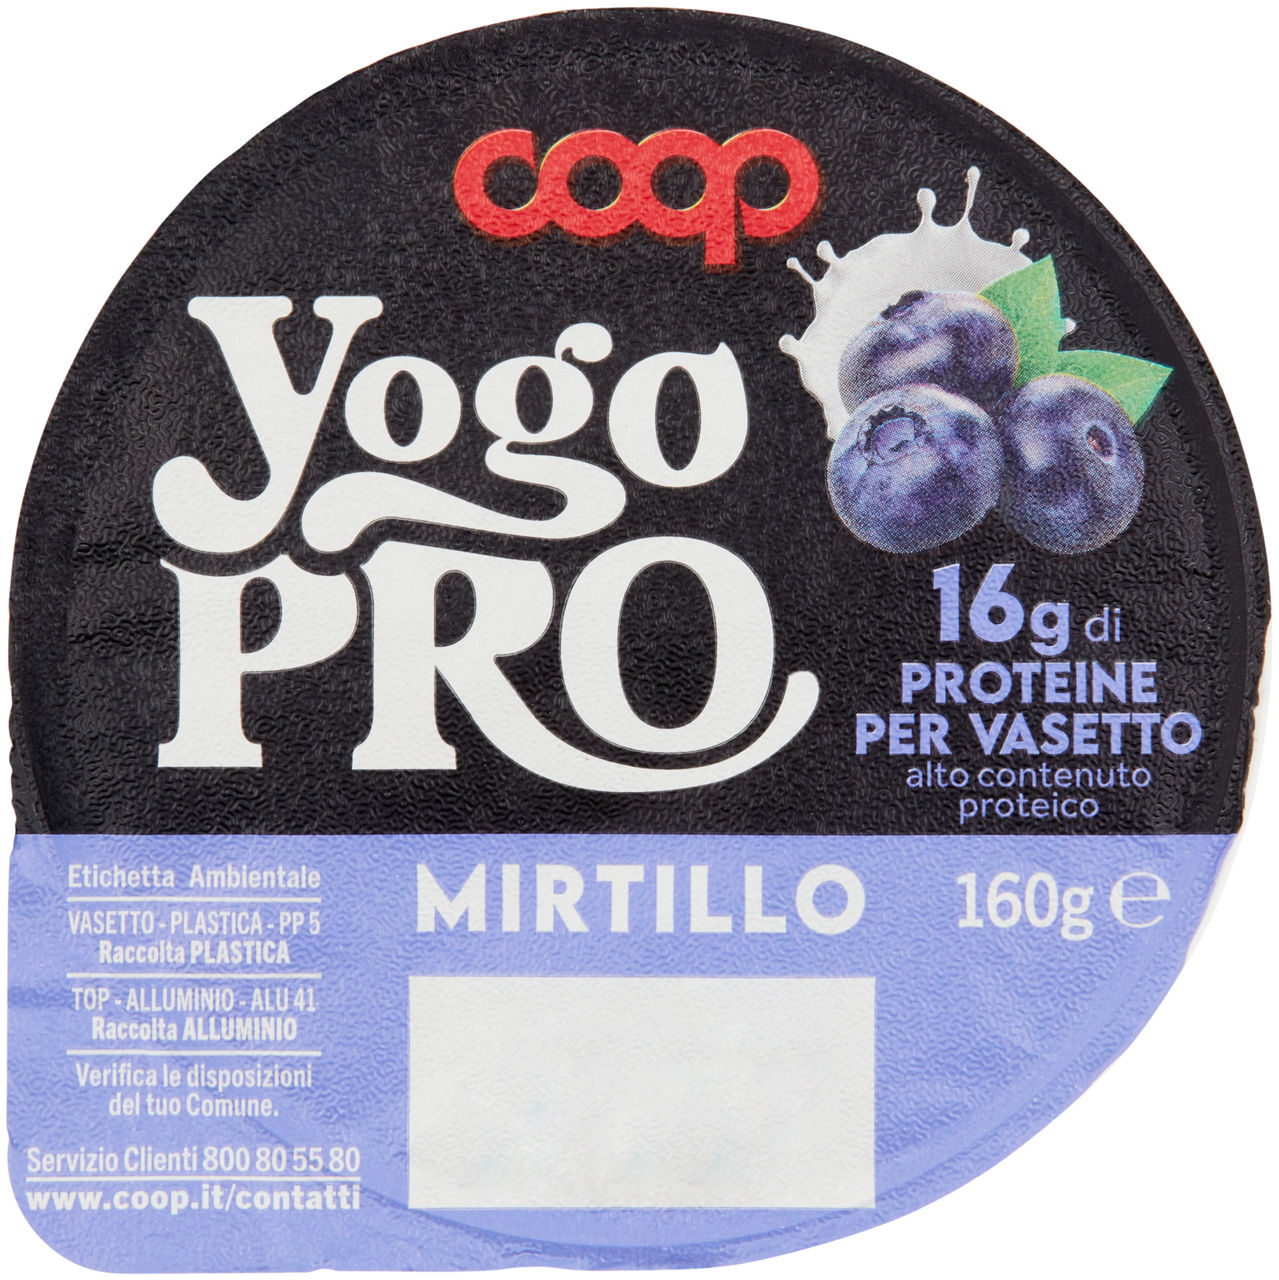 Yogurt proteico yogo pro al cucchiaio mirtillo coop g 160